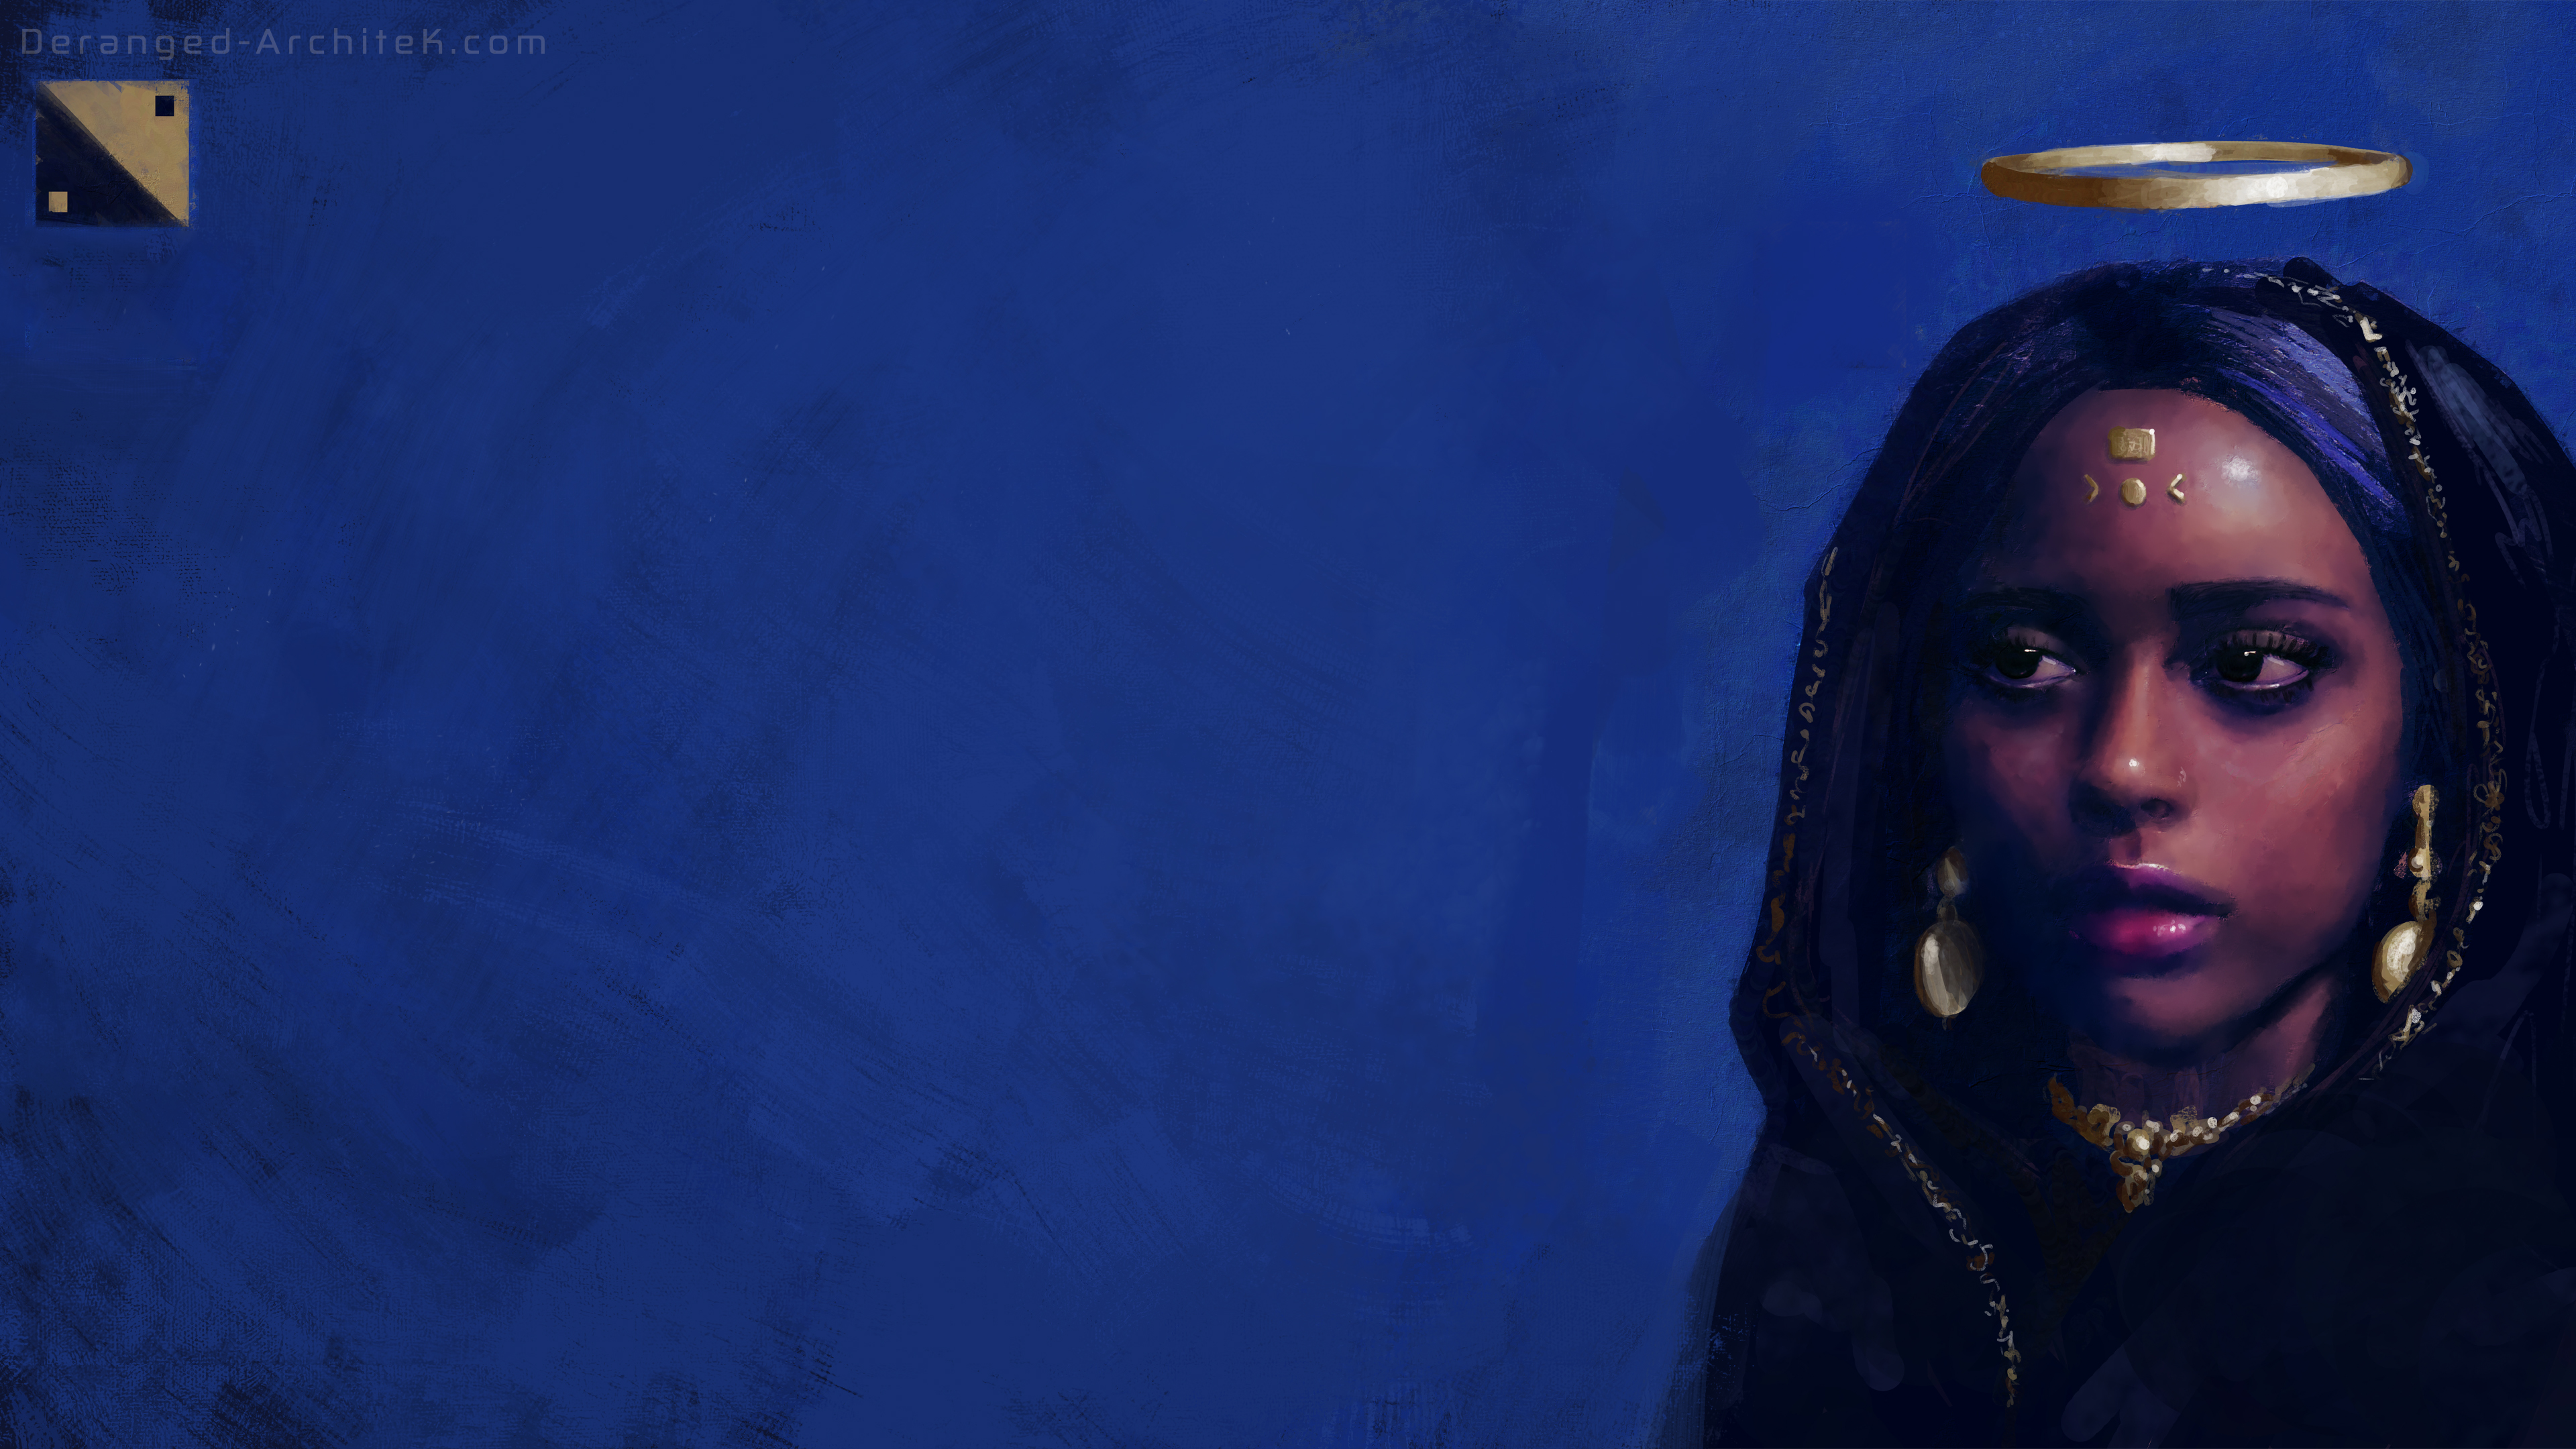 Blue Painting Women Fantasy Art 3840x2160